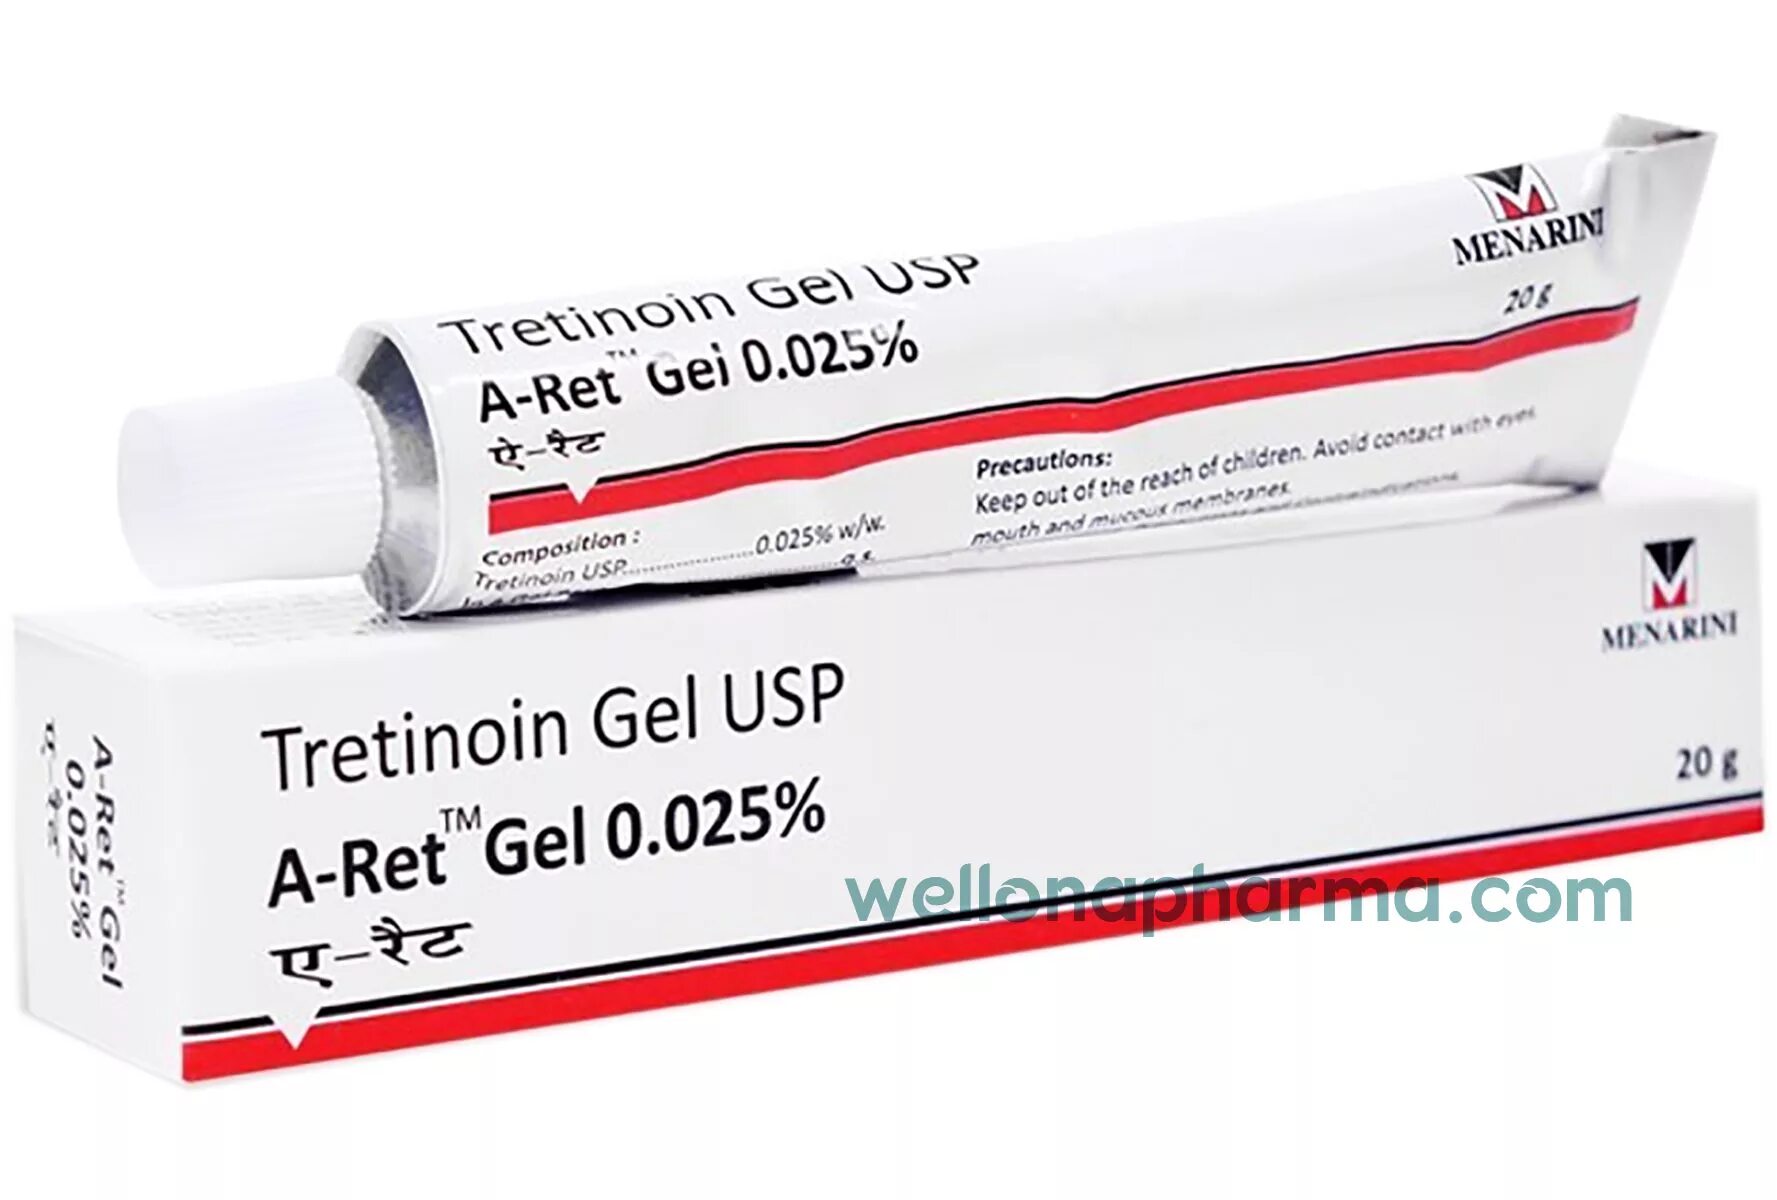 Tretinoin 0.025 гель. Tretinoin Cream 0.025. Tretinoin Gel USP 0.1. Третиноин гель ЮСП А-рет гель 0,1% tretinoin Gel USP A-Ret Gel 0.1% Menarini. Menarini tretinoin gel отзывы